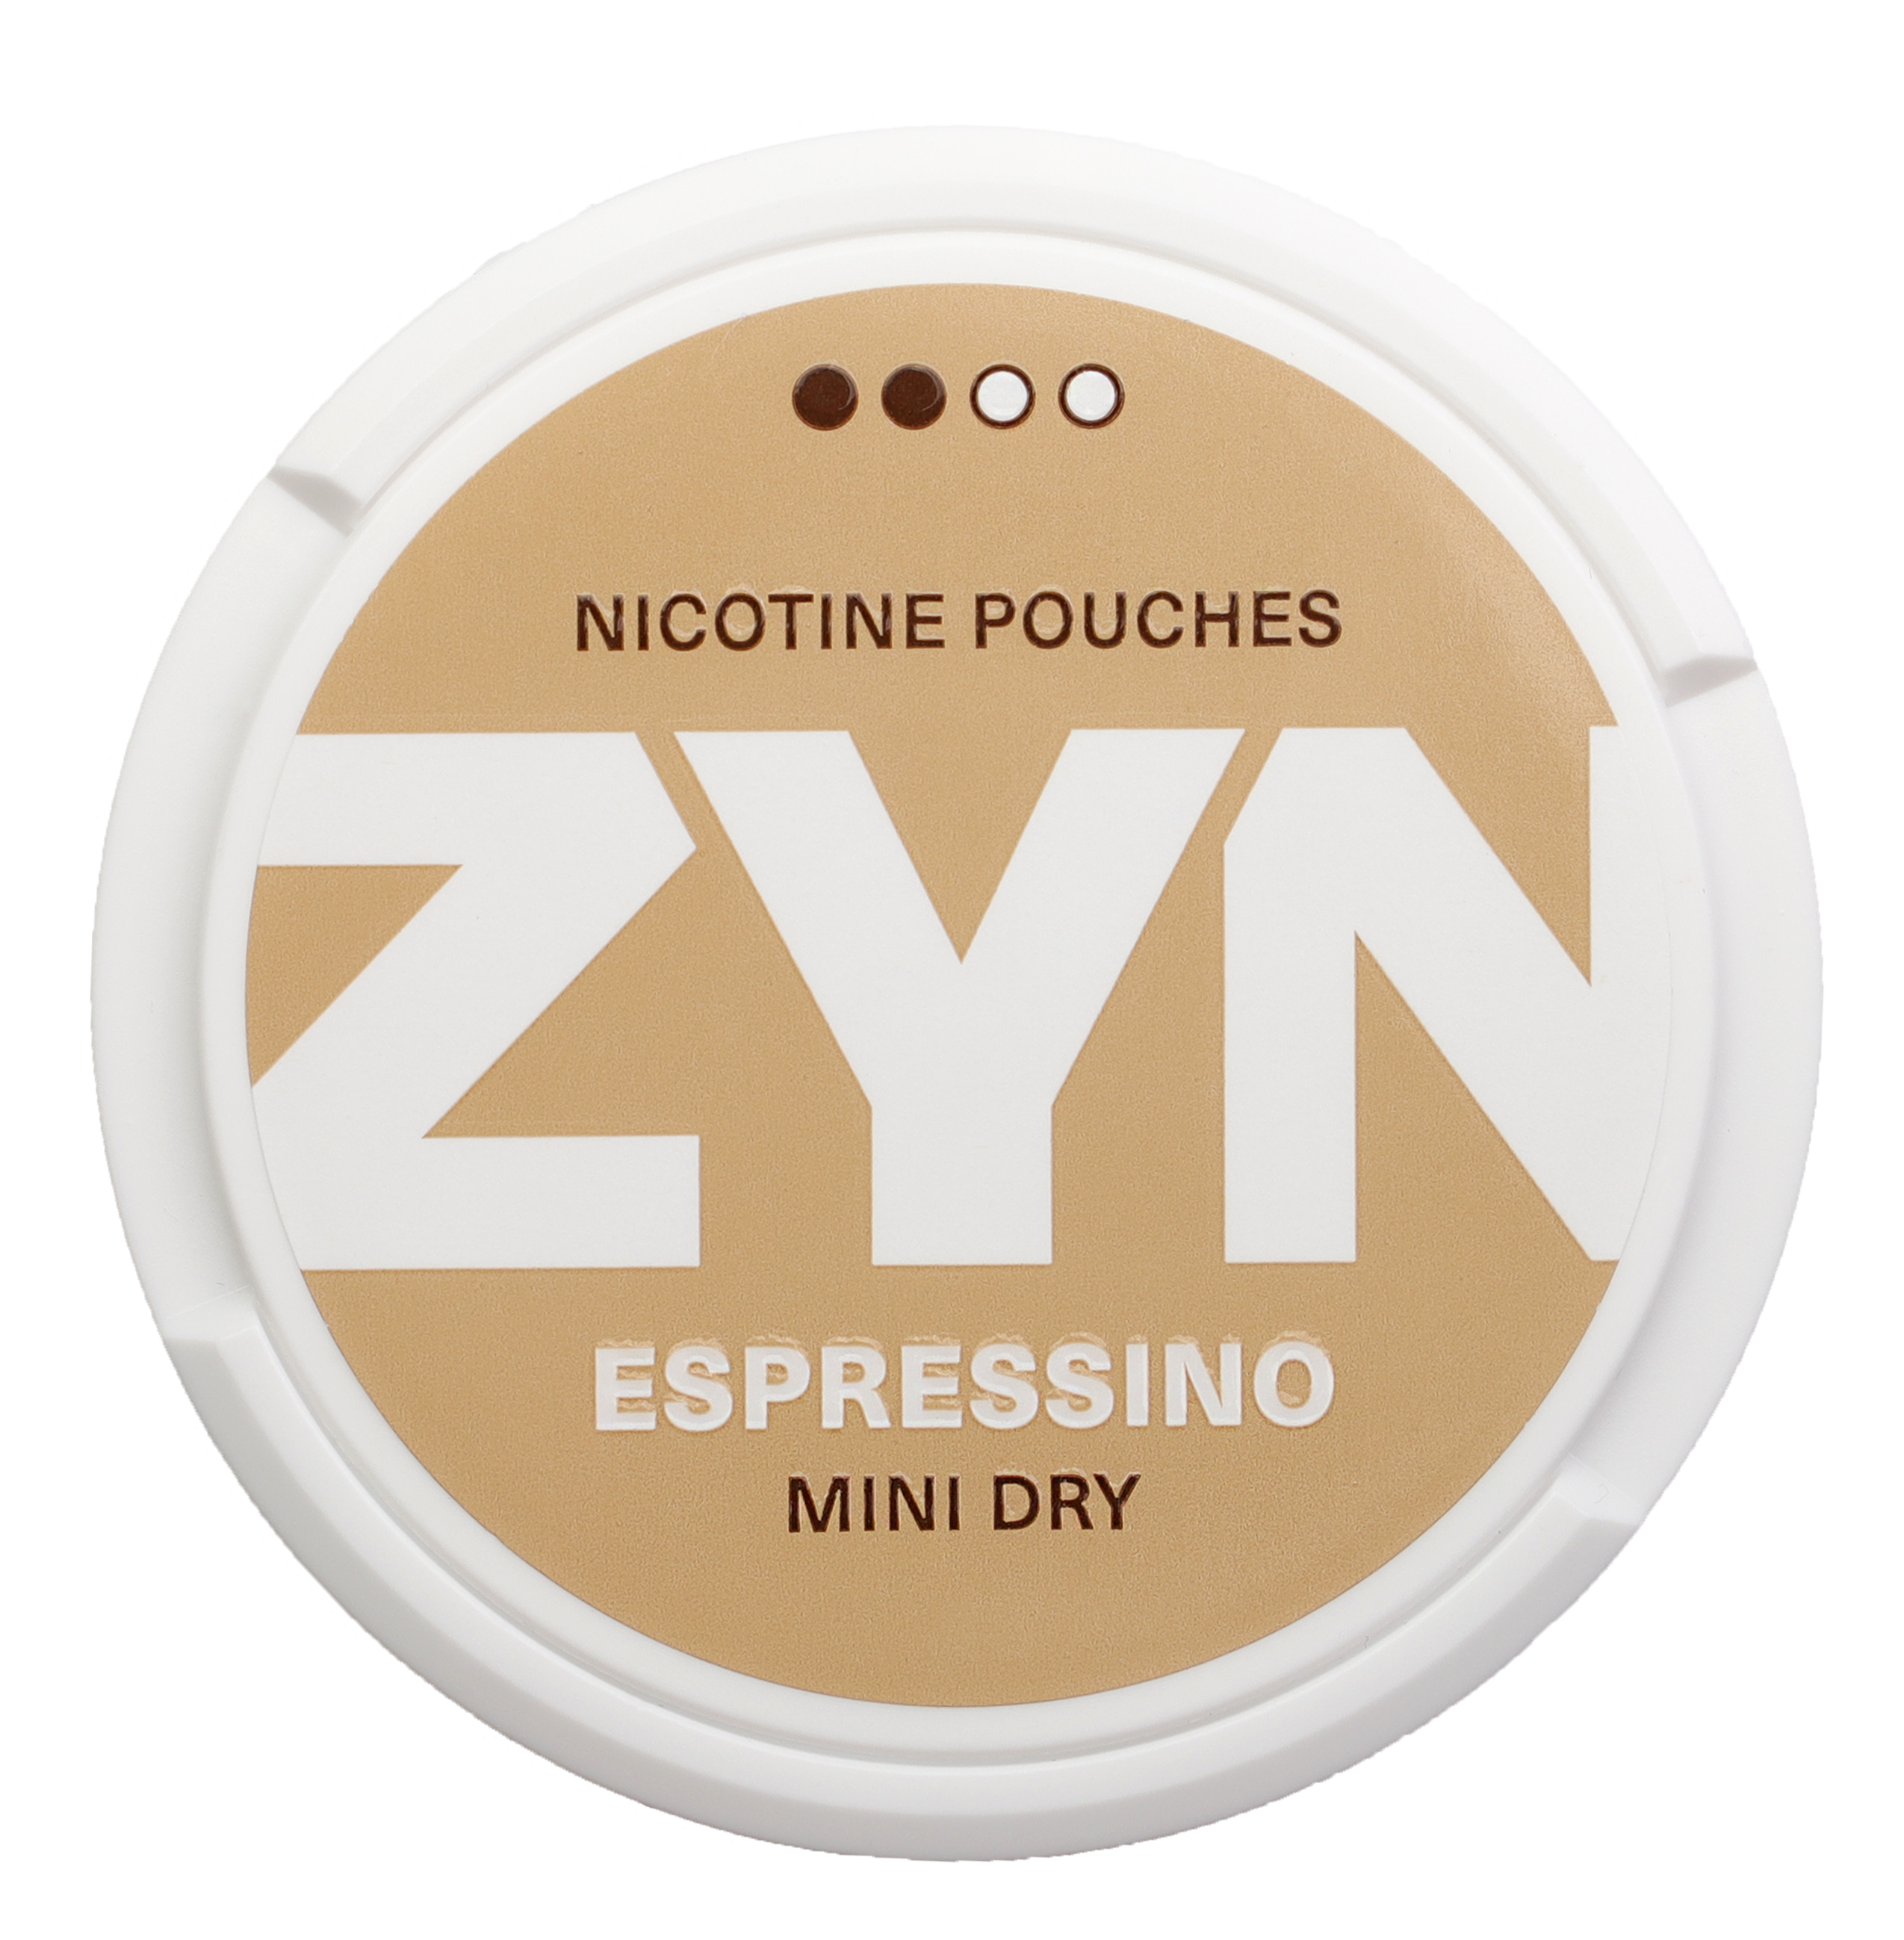 Zyn Espressino Mini Dry Nicotine Pouches Review & Opinion